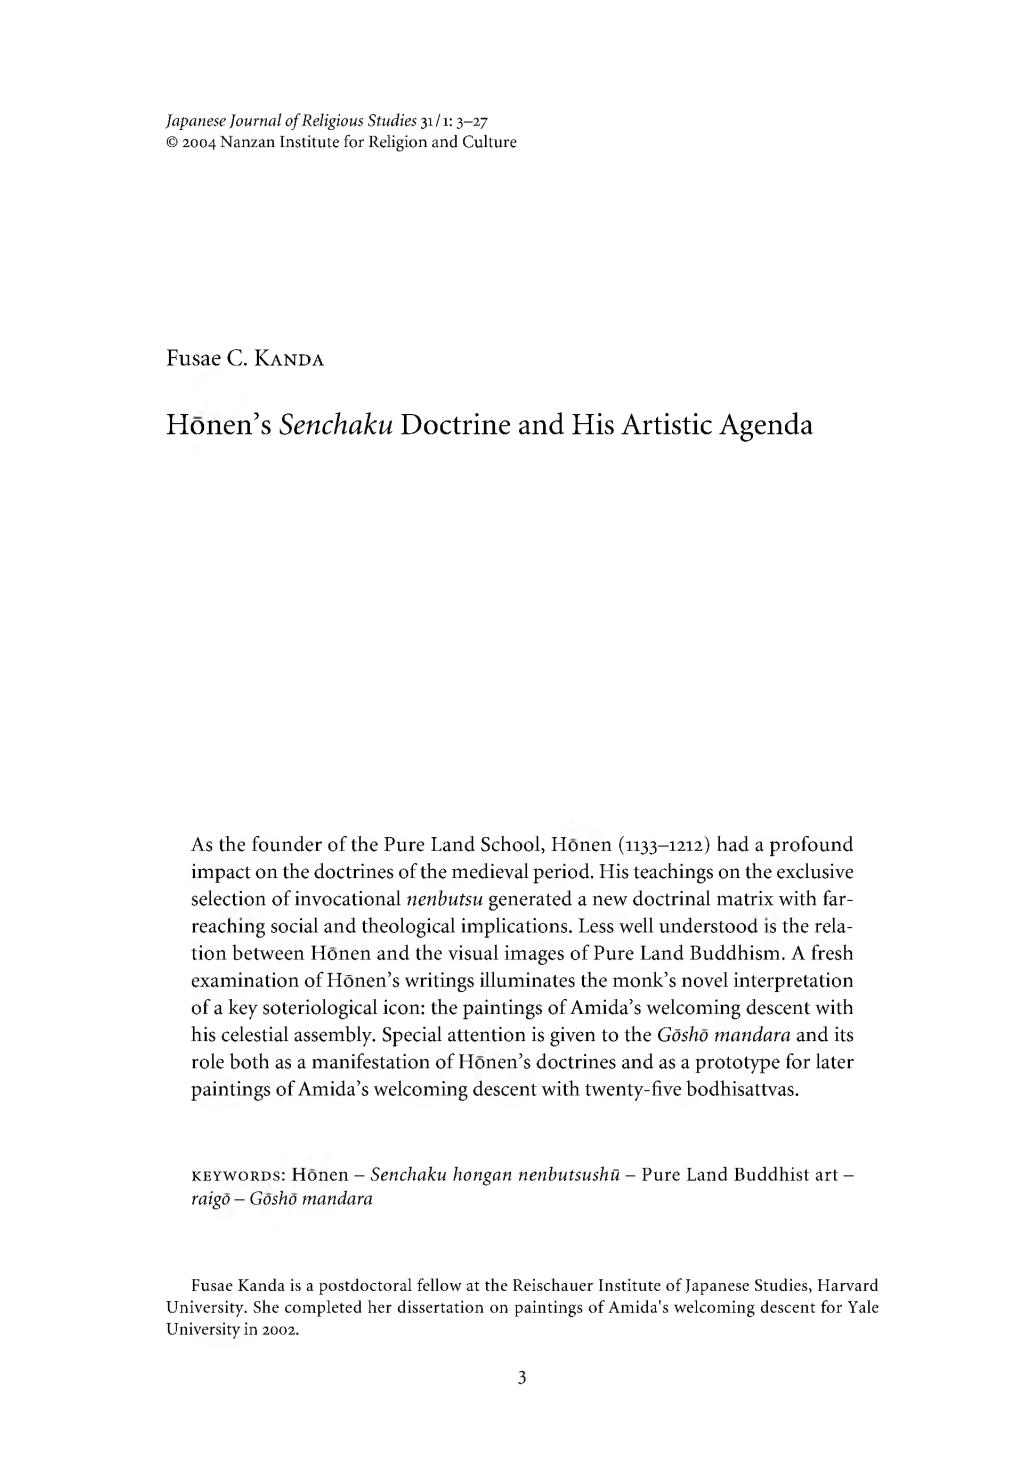 Honen's Senchaku Doctrine and His Artistic Agenda